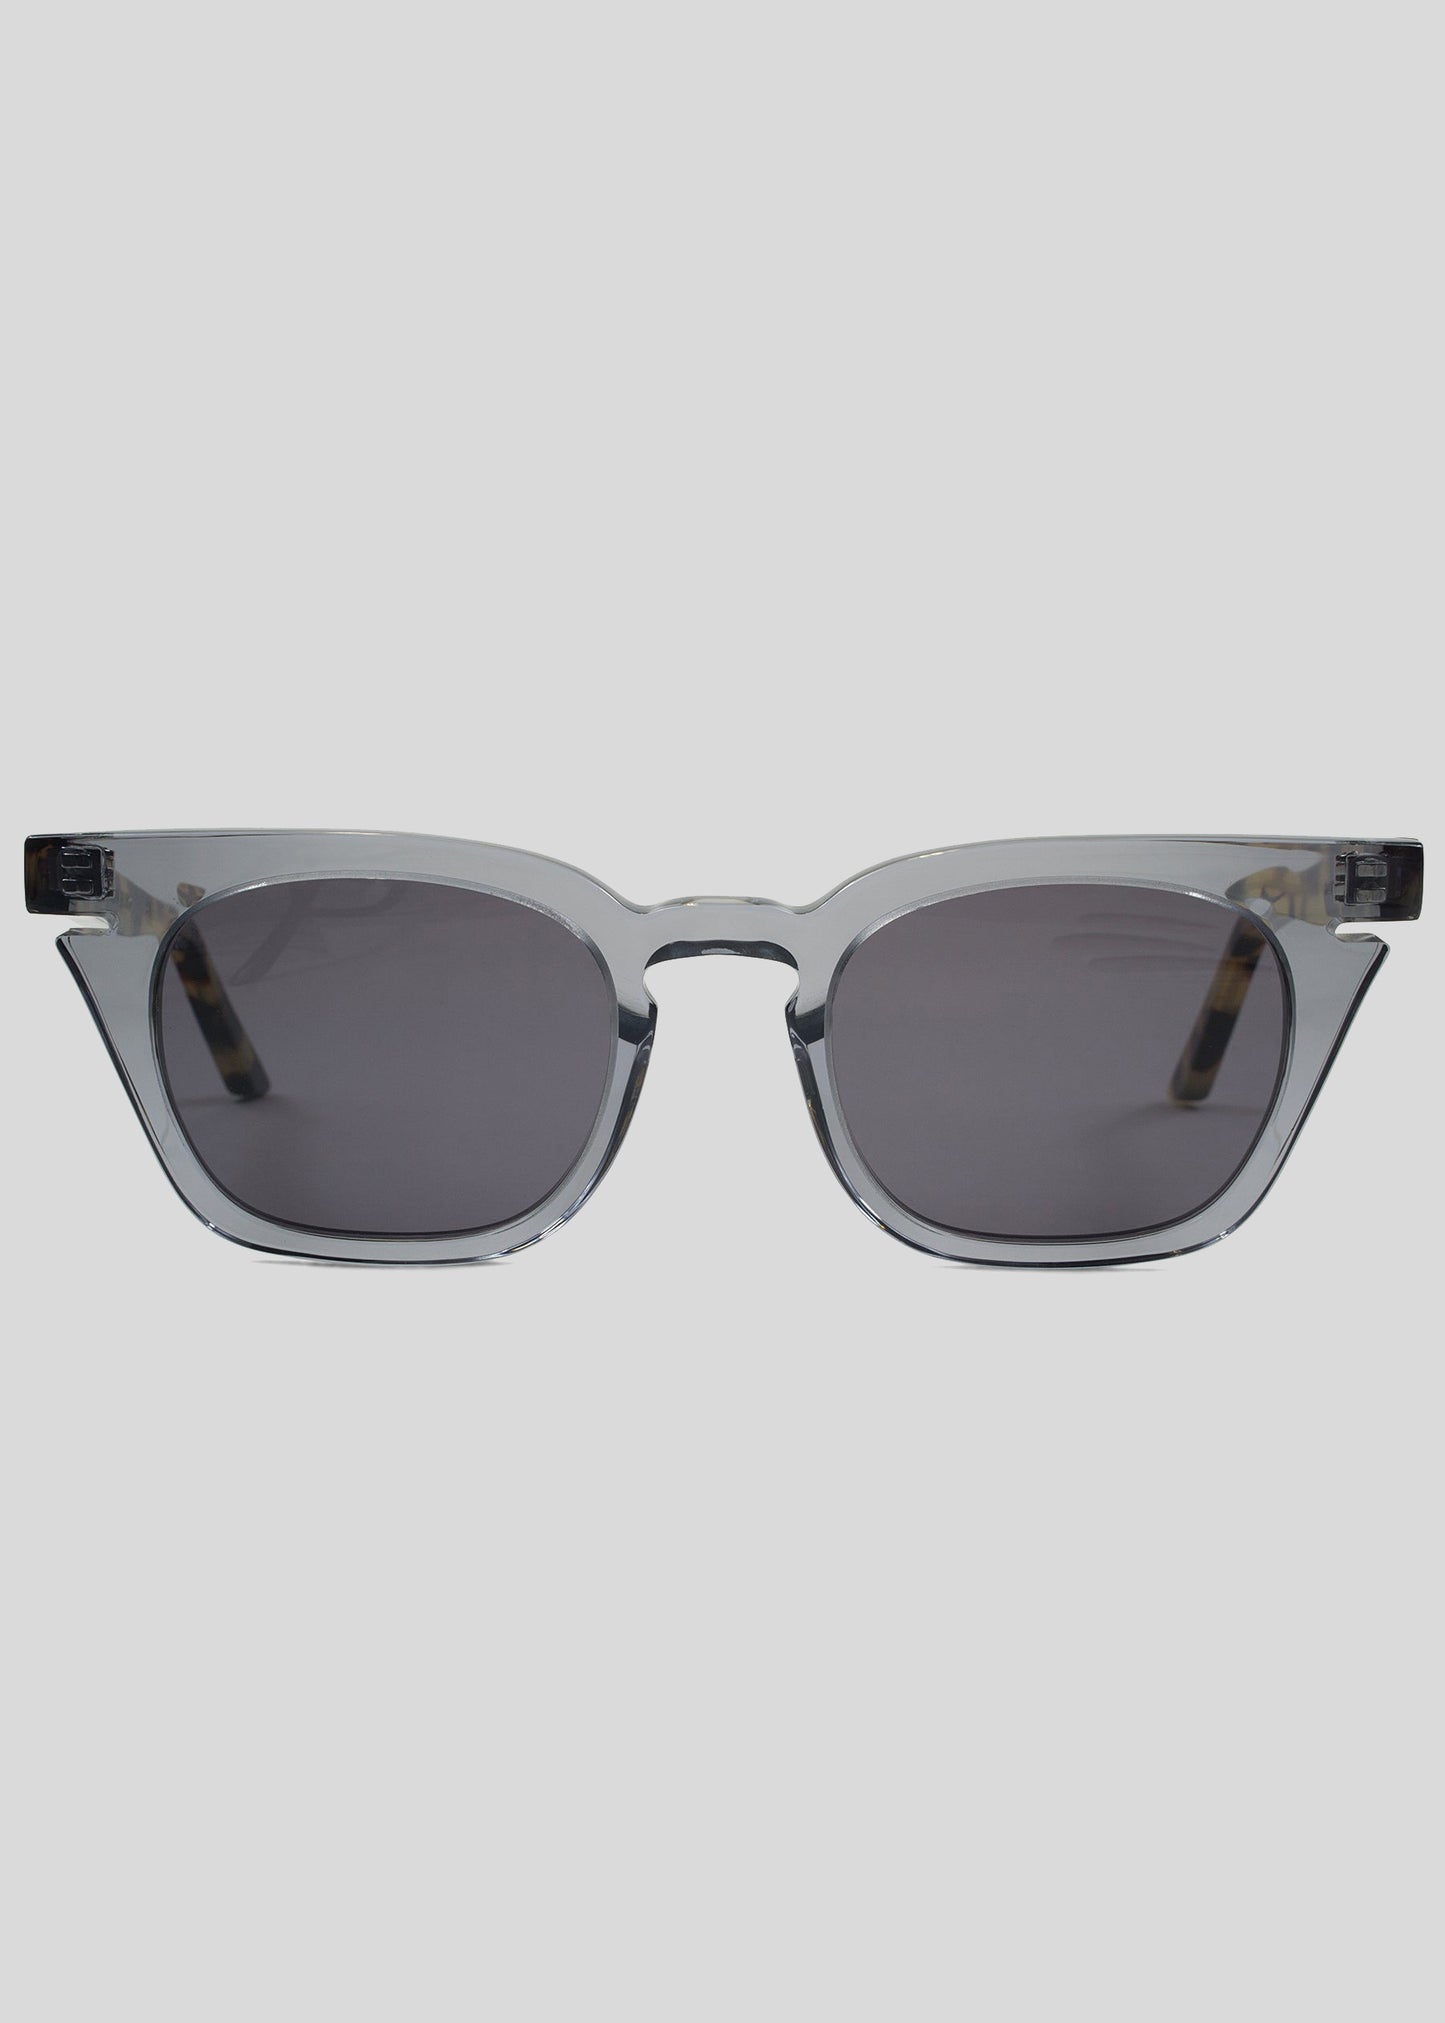 Roseland Grey Sunglasses front